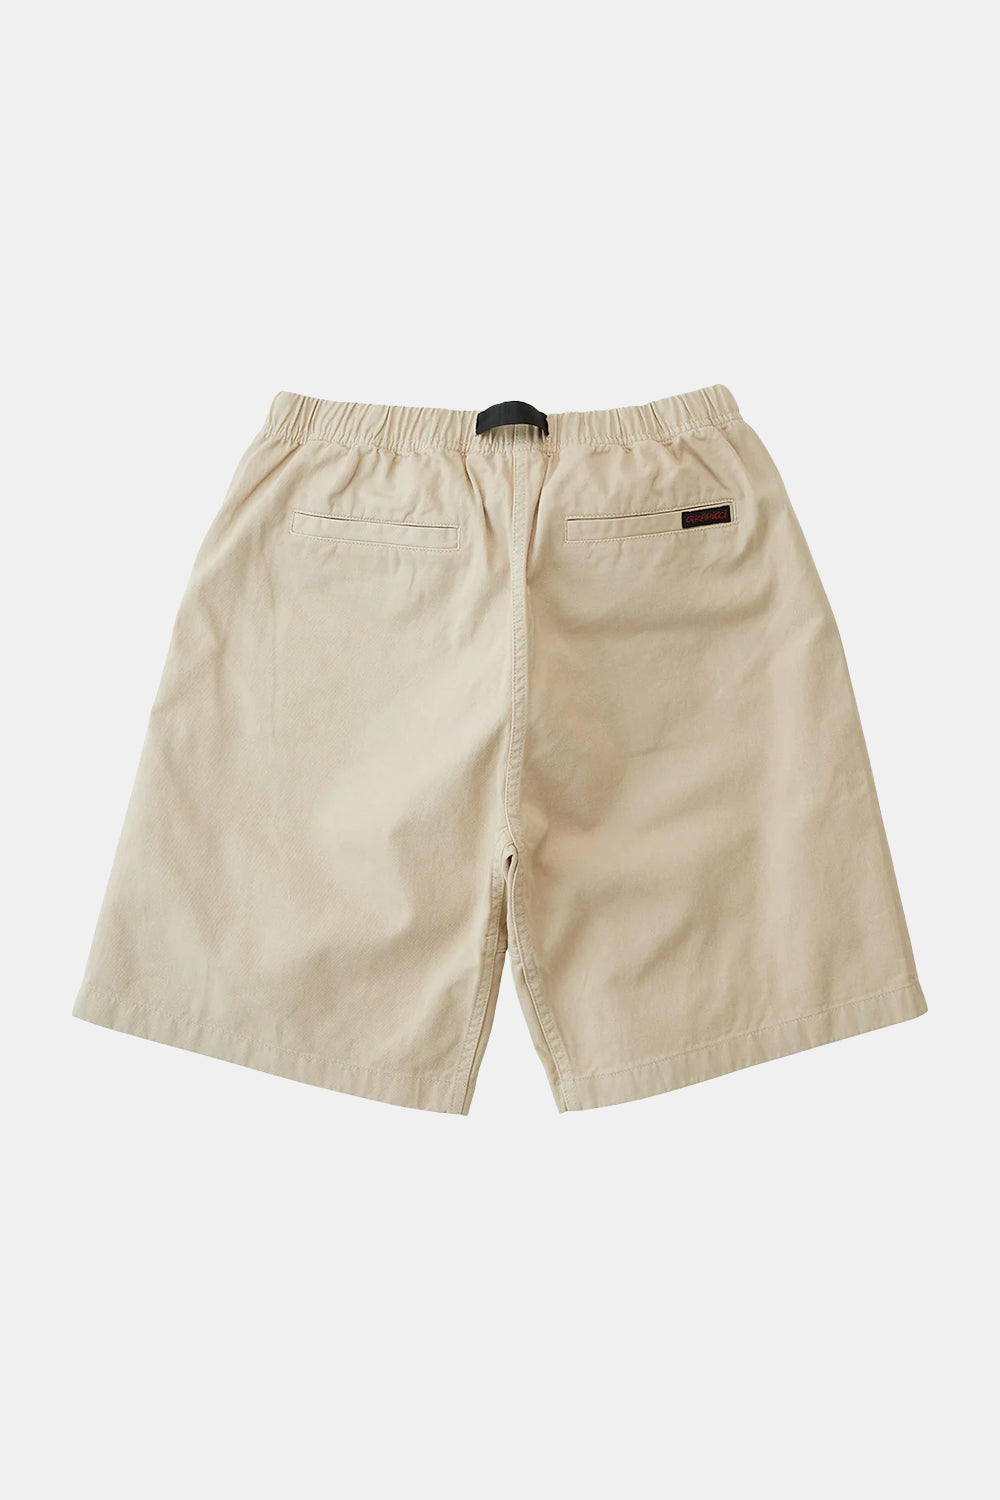 Gramicci G-Shorts Double-ringspun Organic Cotton Twill (U.S Chino)